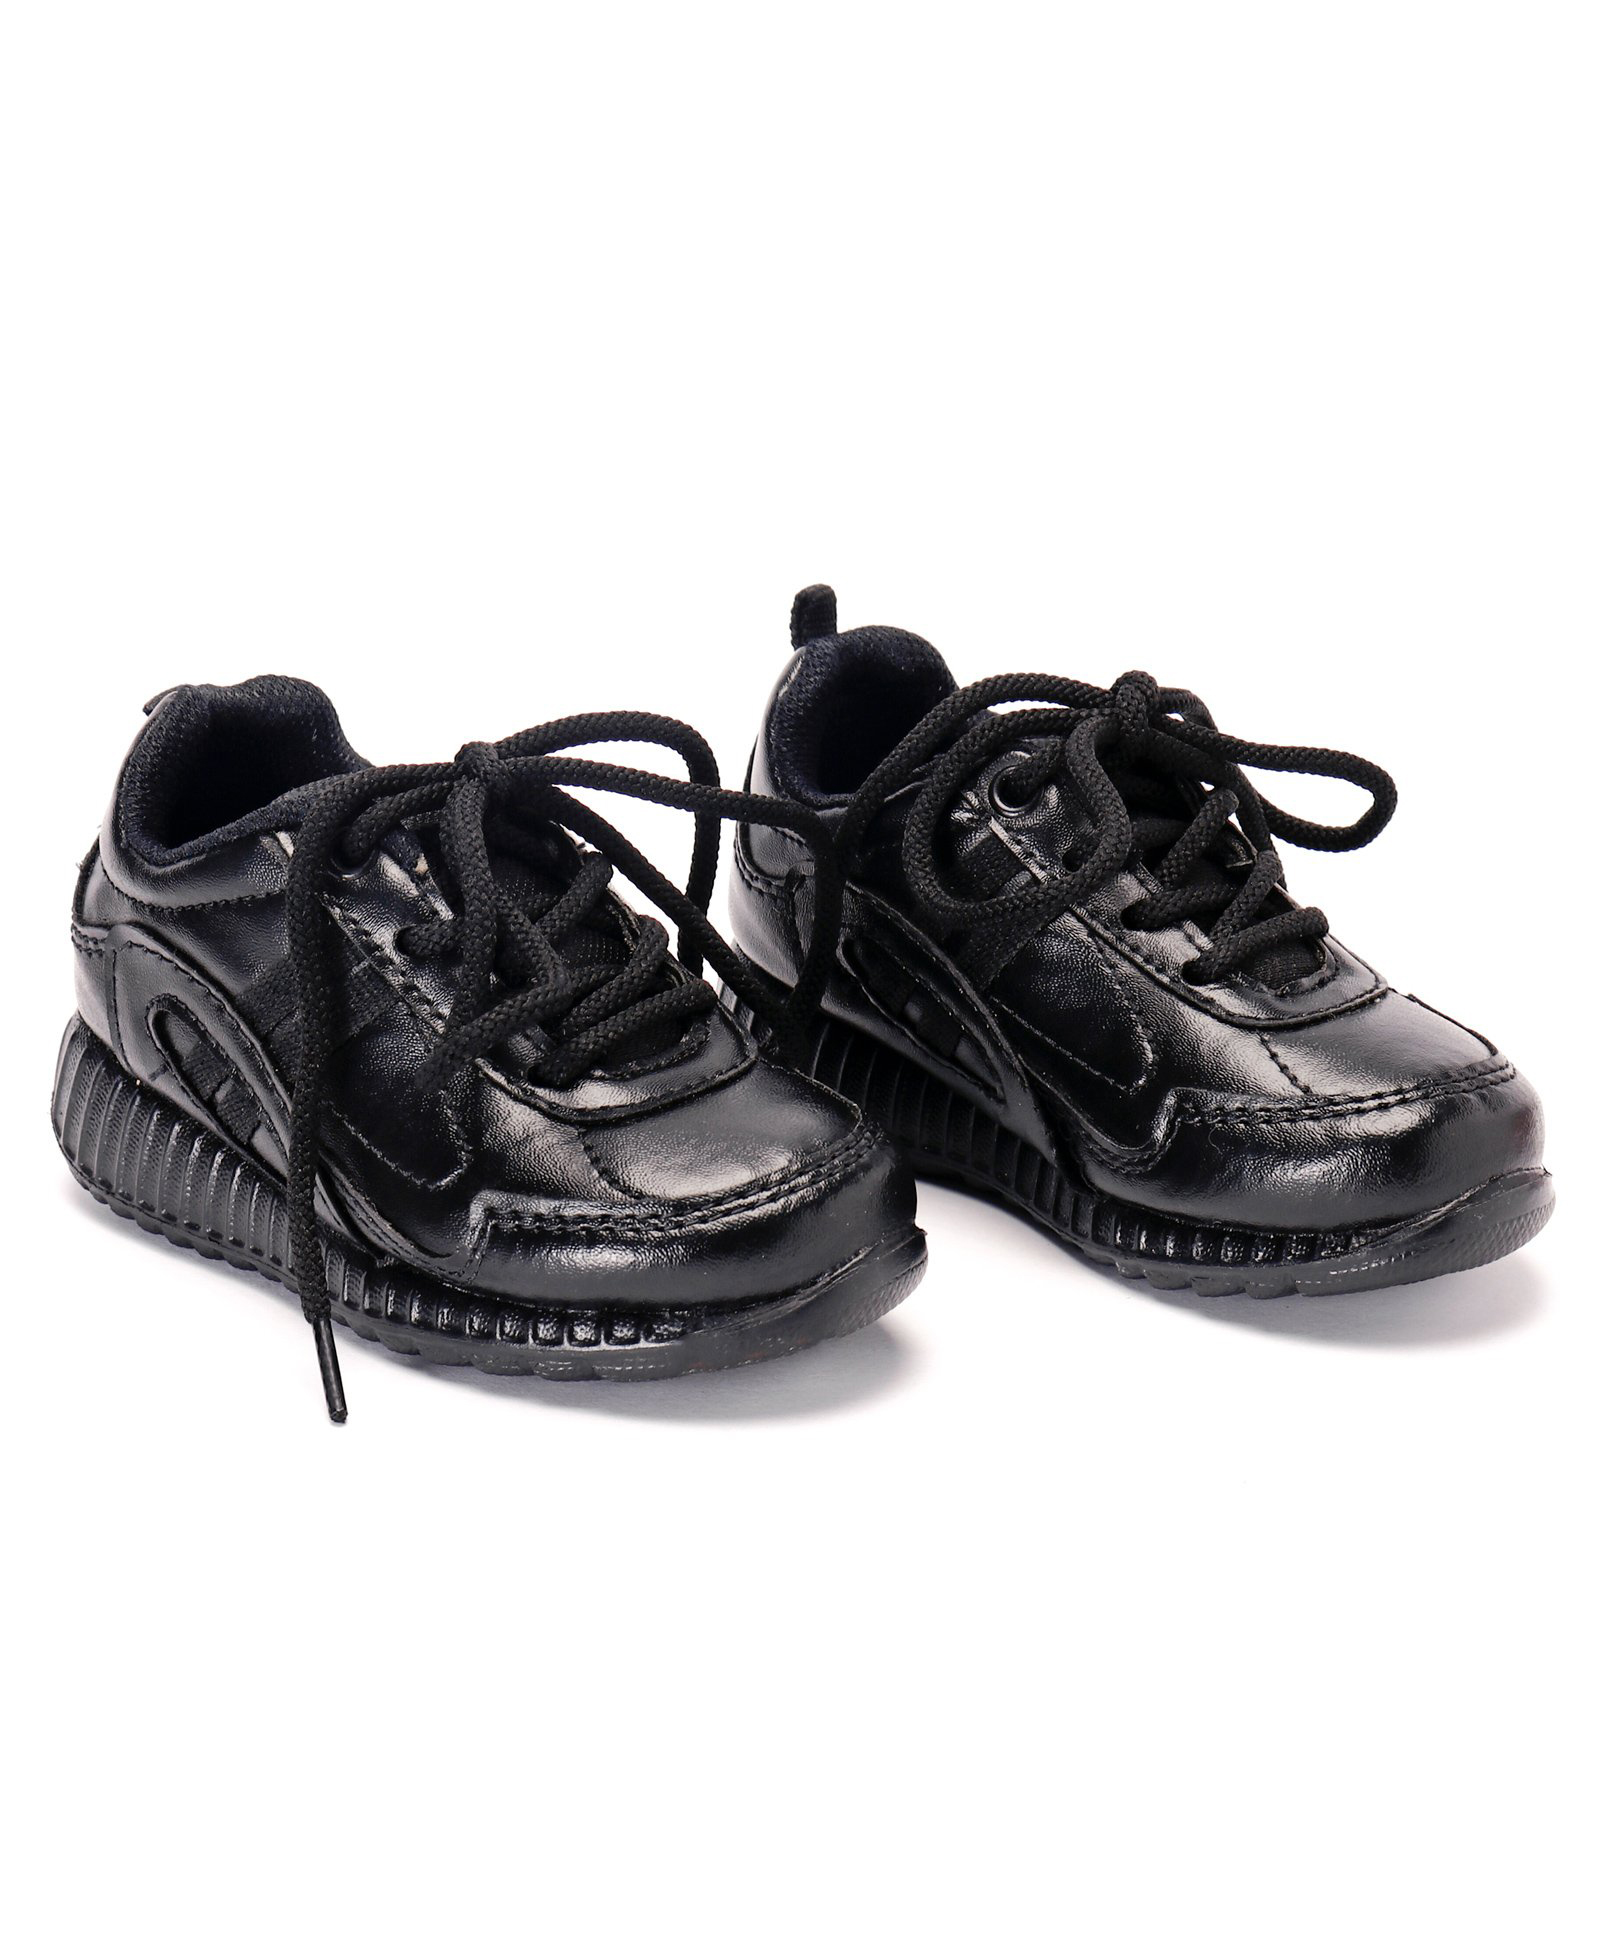 force 10 school shoes black